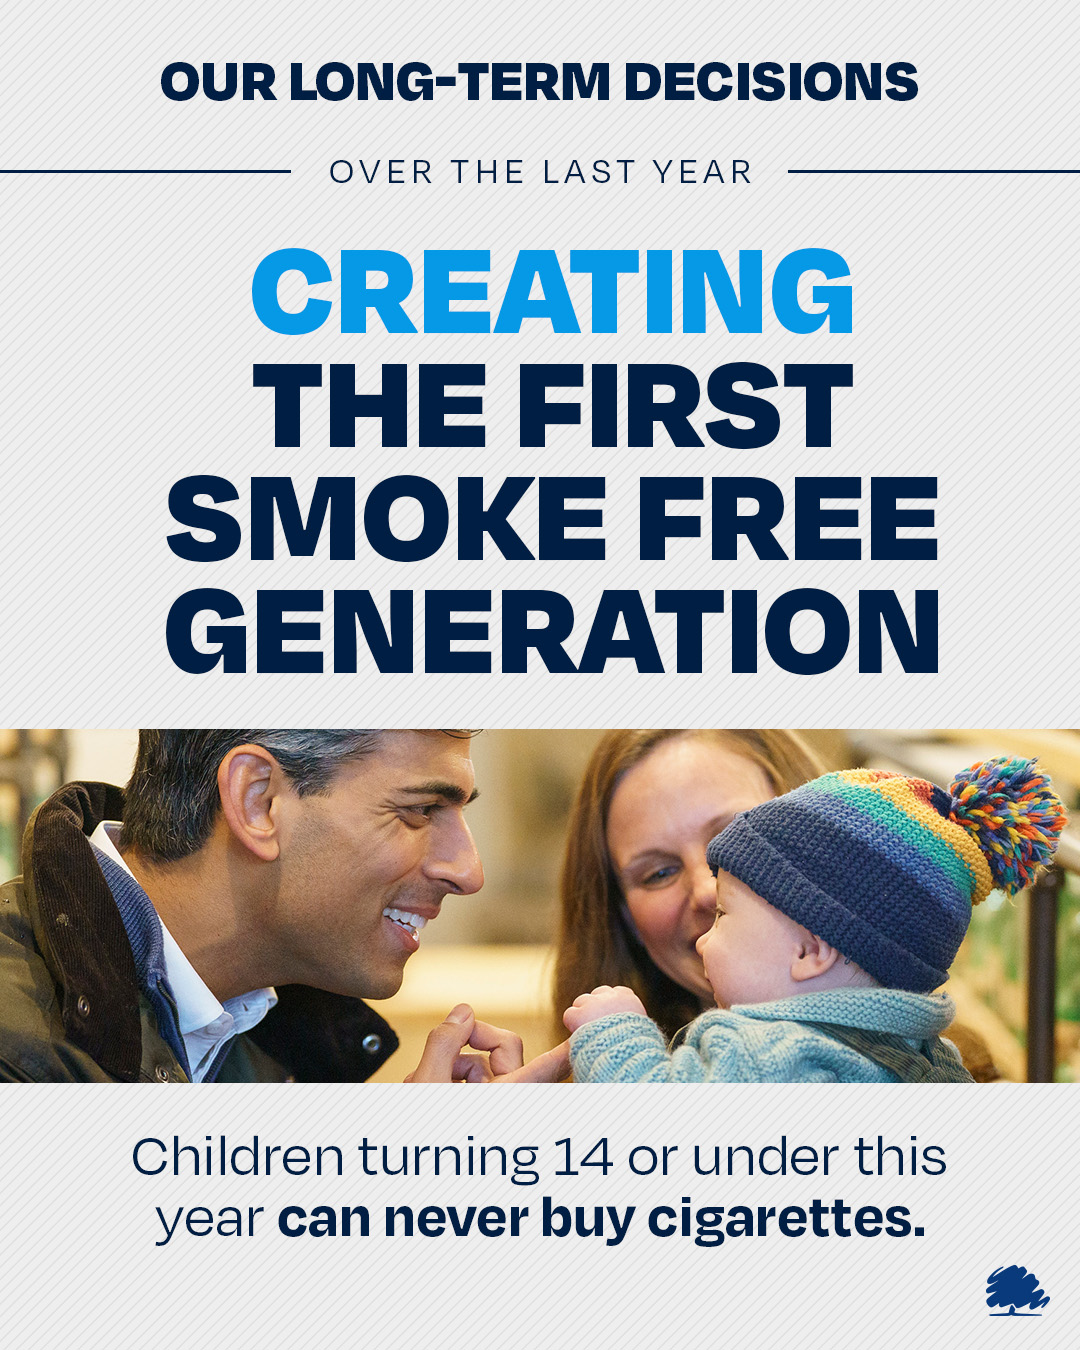 The first smoke free generation